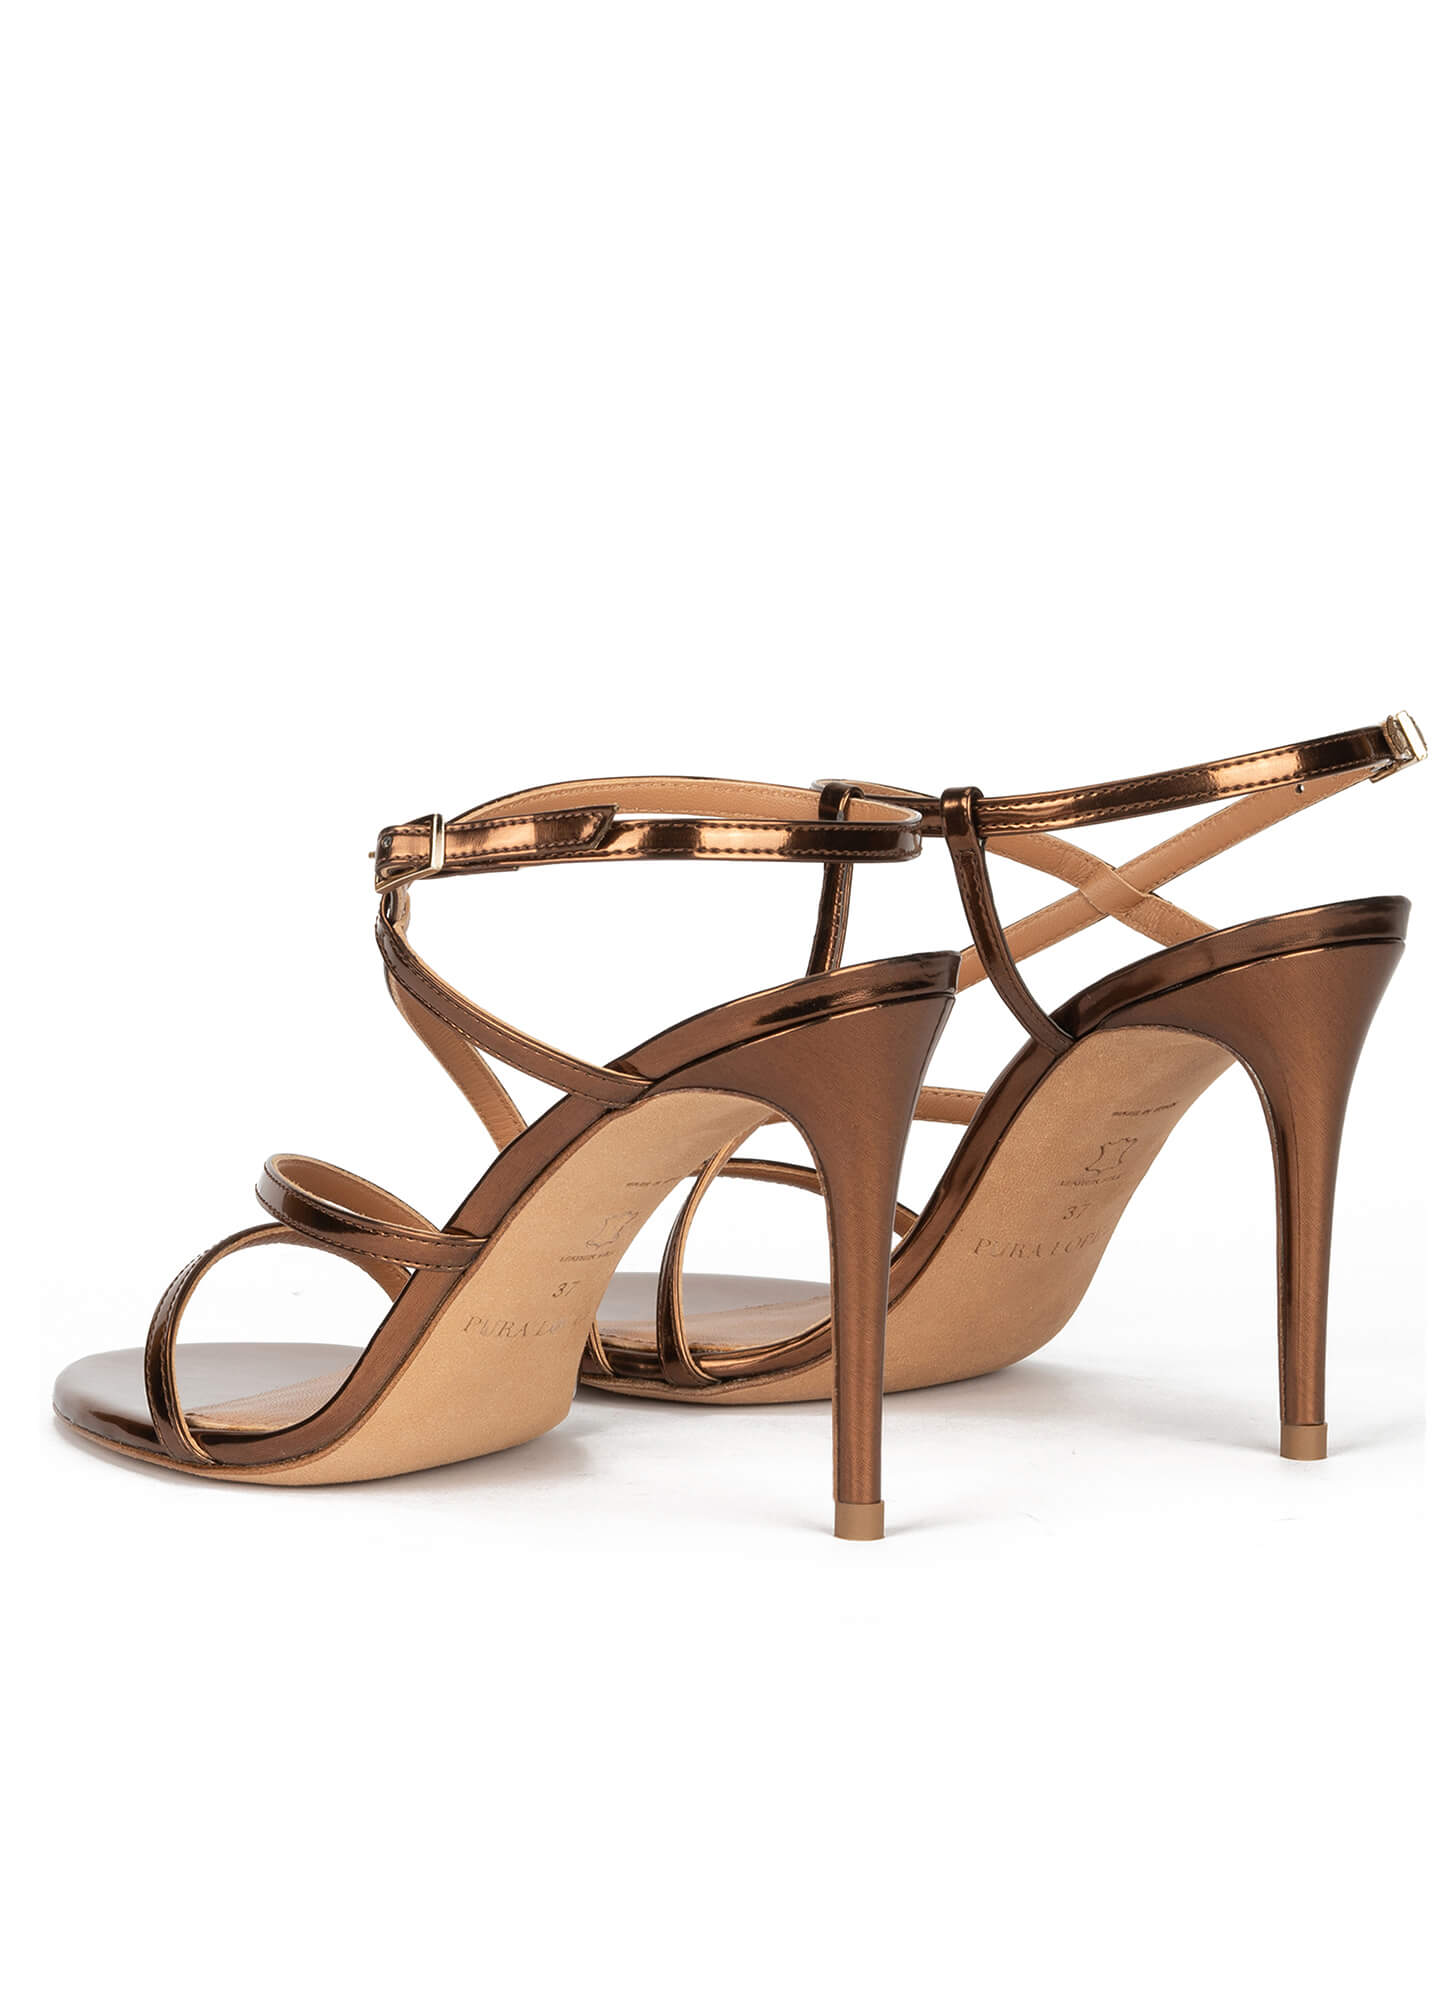 Minimalist design high heel sandals in bronze leather . PURA LOPEZ